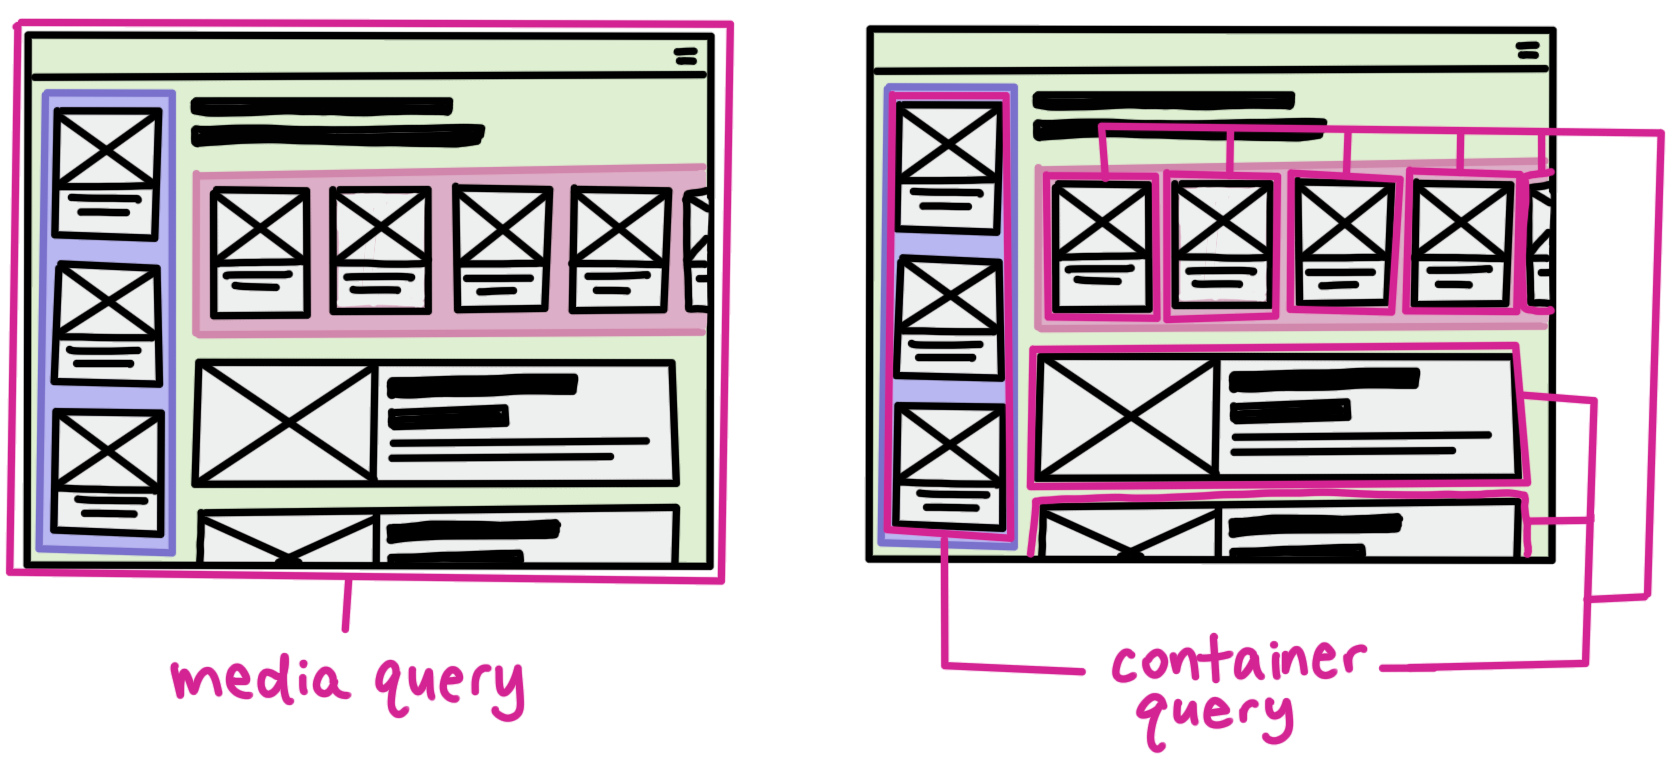 diagram of a media query vs. a container query